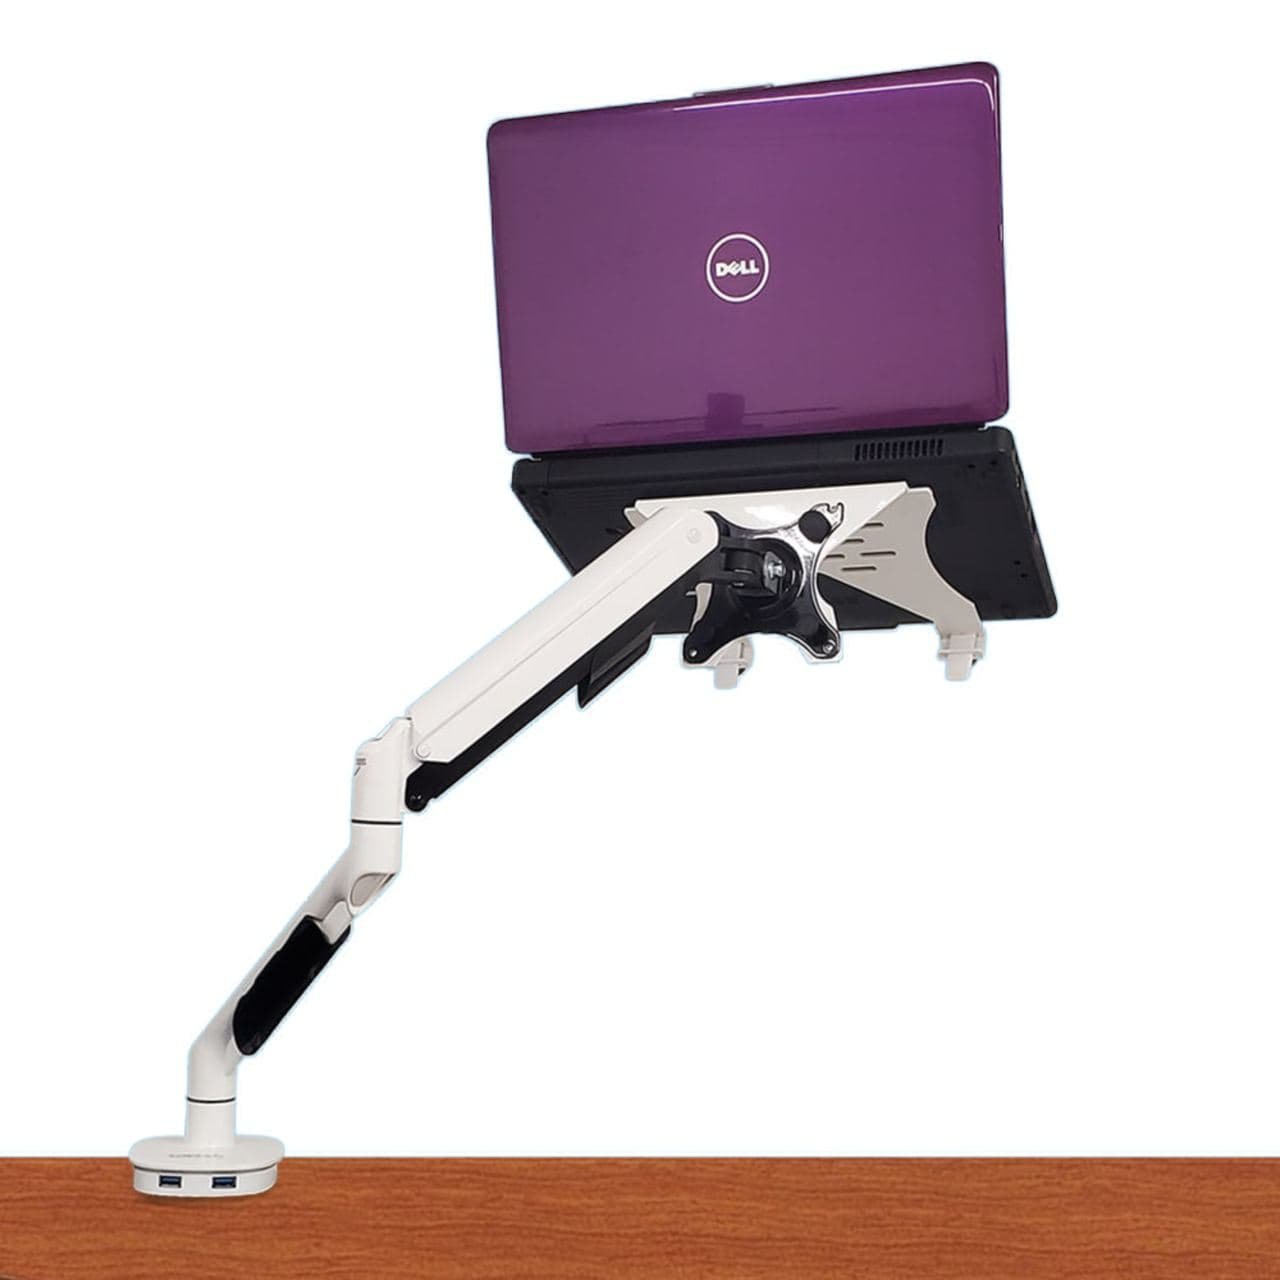 EDL-W Laptop Arm with 2 USB Ports - White - Height and Depth Adjustable - ErgoDirect/Loctek